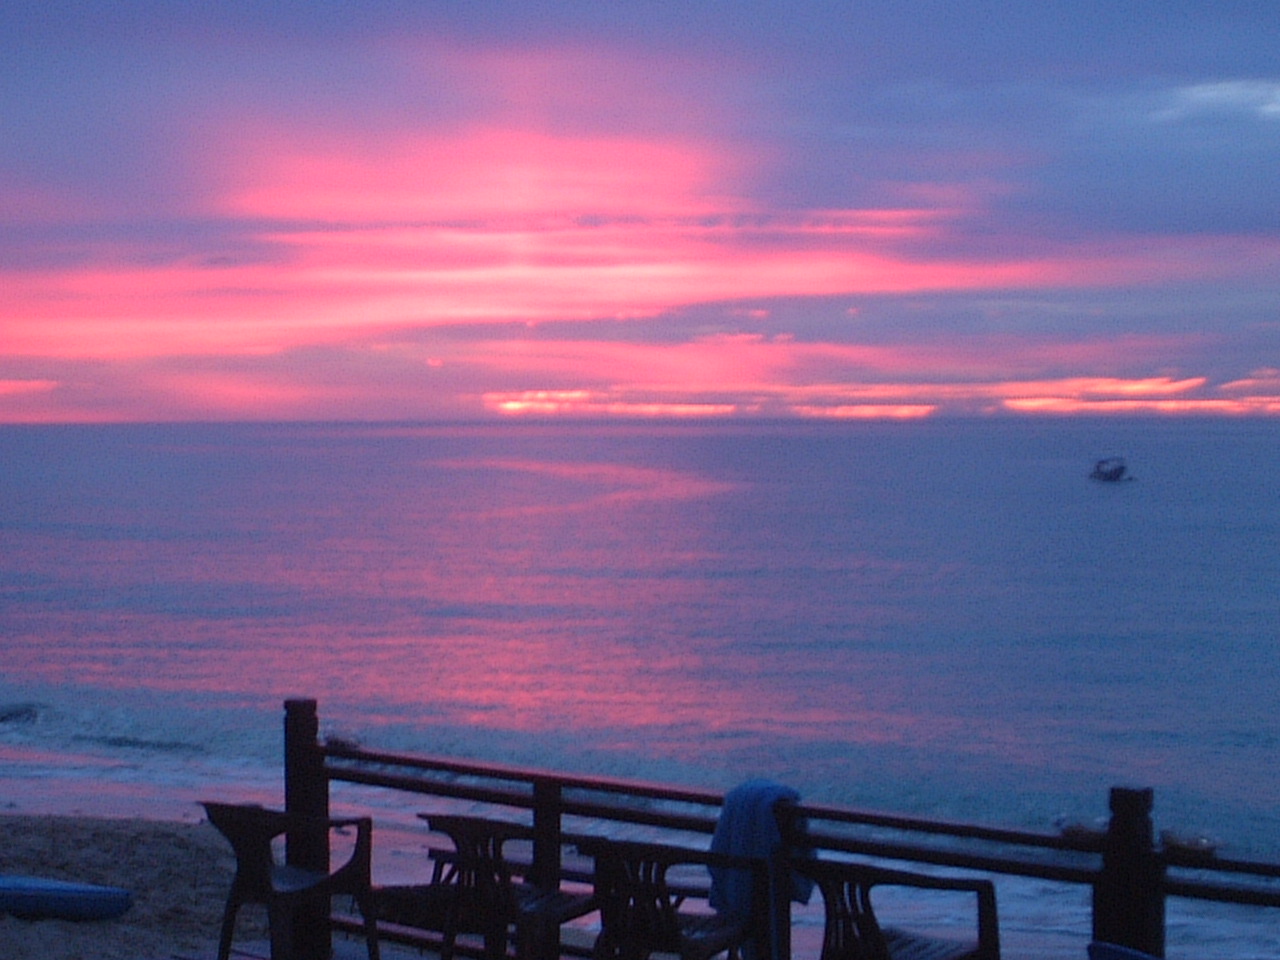 Sunset at Tioman Island, Malaysia